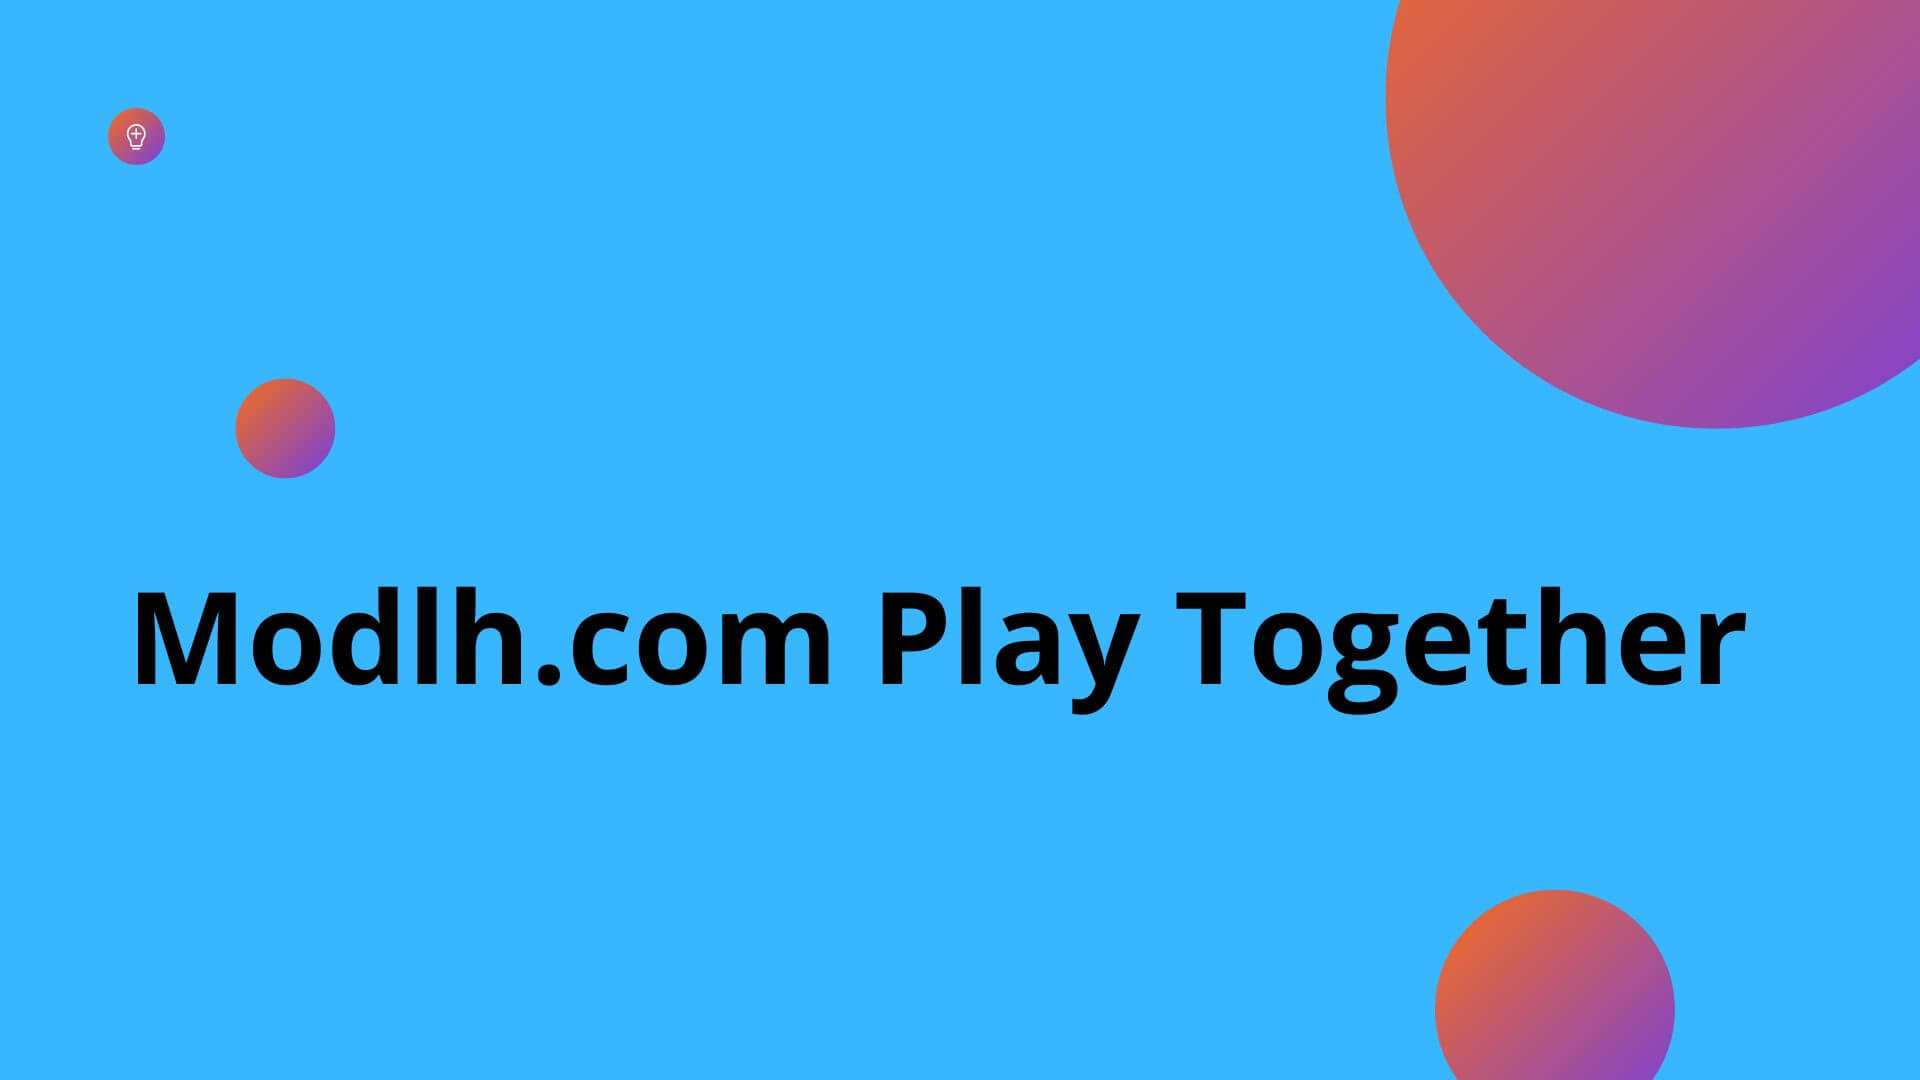 Modlh.com Play Together (August 2022) Complete Details!